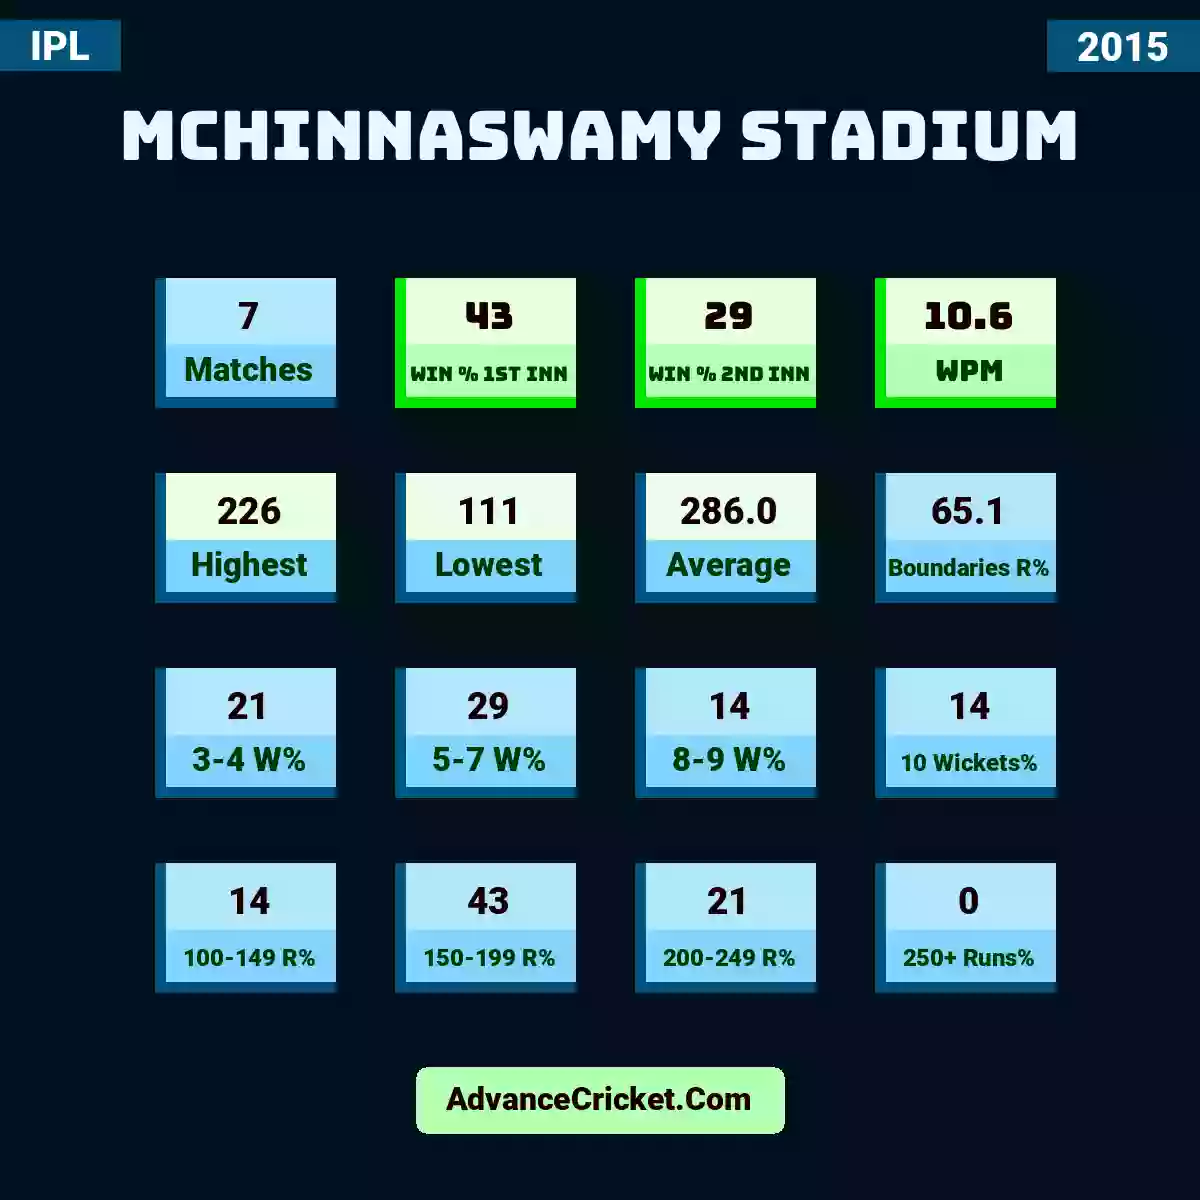 Image showing MChinnaswamy Stadium with Matches: 7, Win % 1st Inn: 43, Win % 2nd Inn: 29, WPM: 10.6, Highest: 226, Lowest: 111, Average: 286.0, Boundaries R%: 65.1, 3-4 W%: 21, 5-7 W%: 29, 8-9 W%: 14, 10 Wickets%: 14, 100-149 R%: 14, 150-199 R%: 43, 200-249 R%: 21, 250+ Runs%: 0.